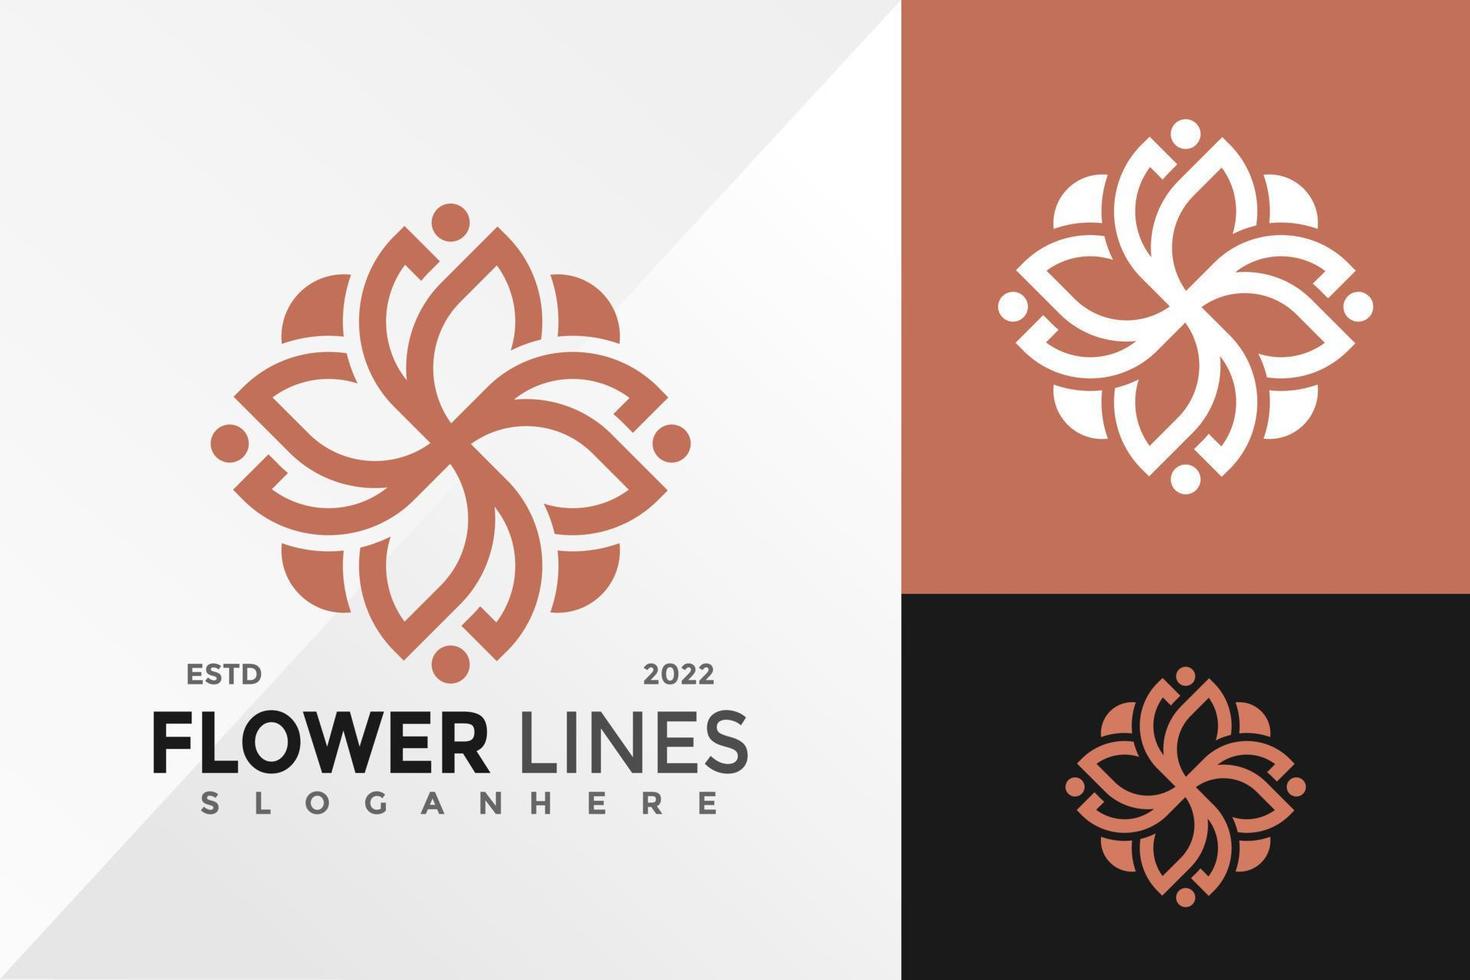 Beauty Flower Spa Logo Design Vector illustration template